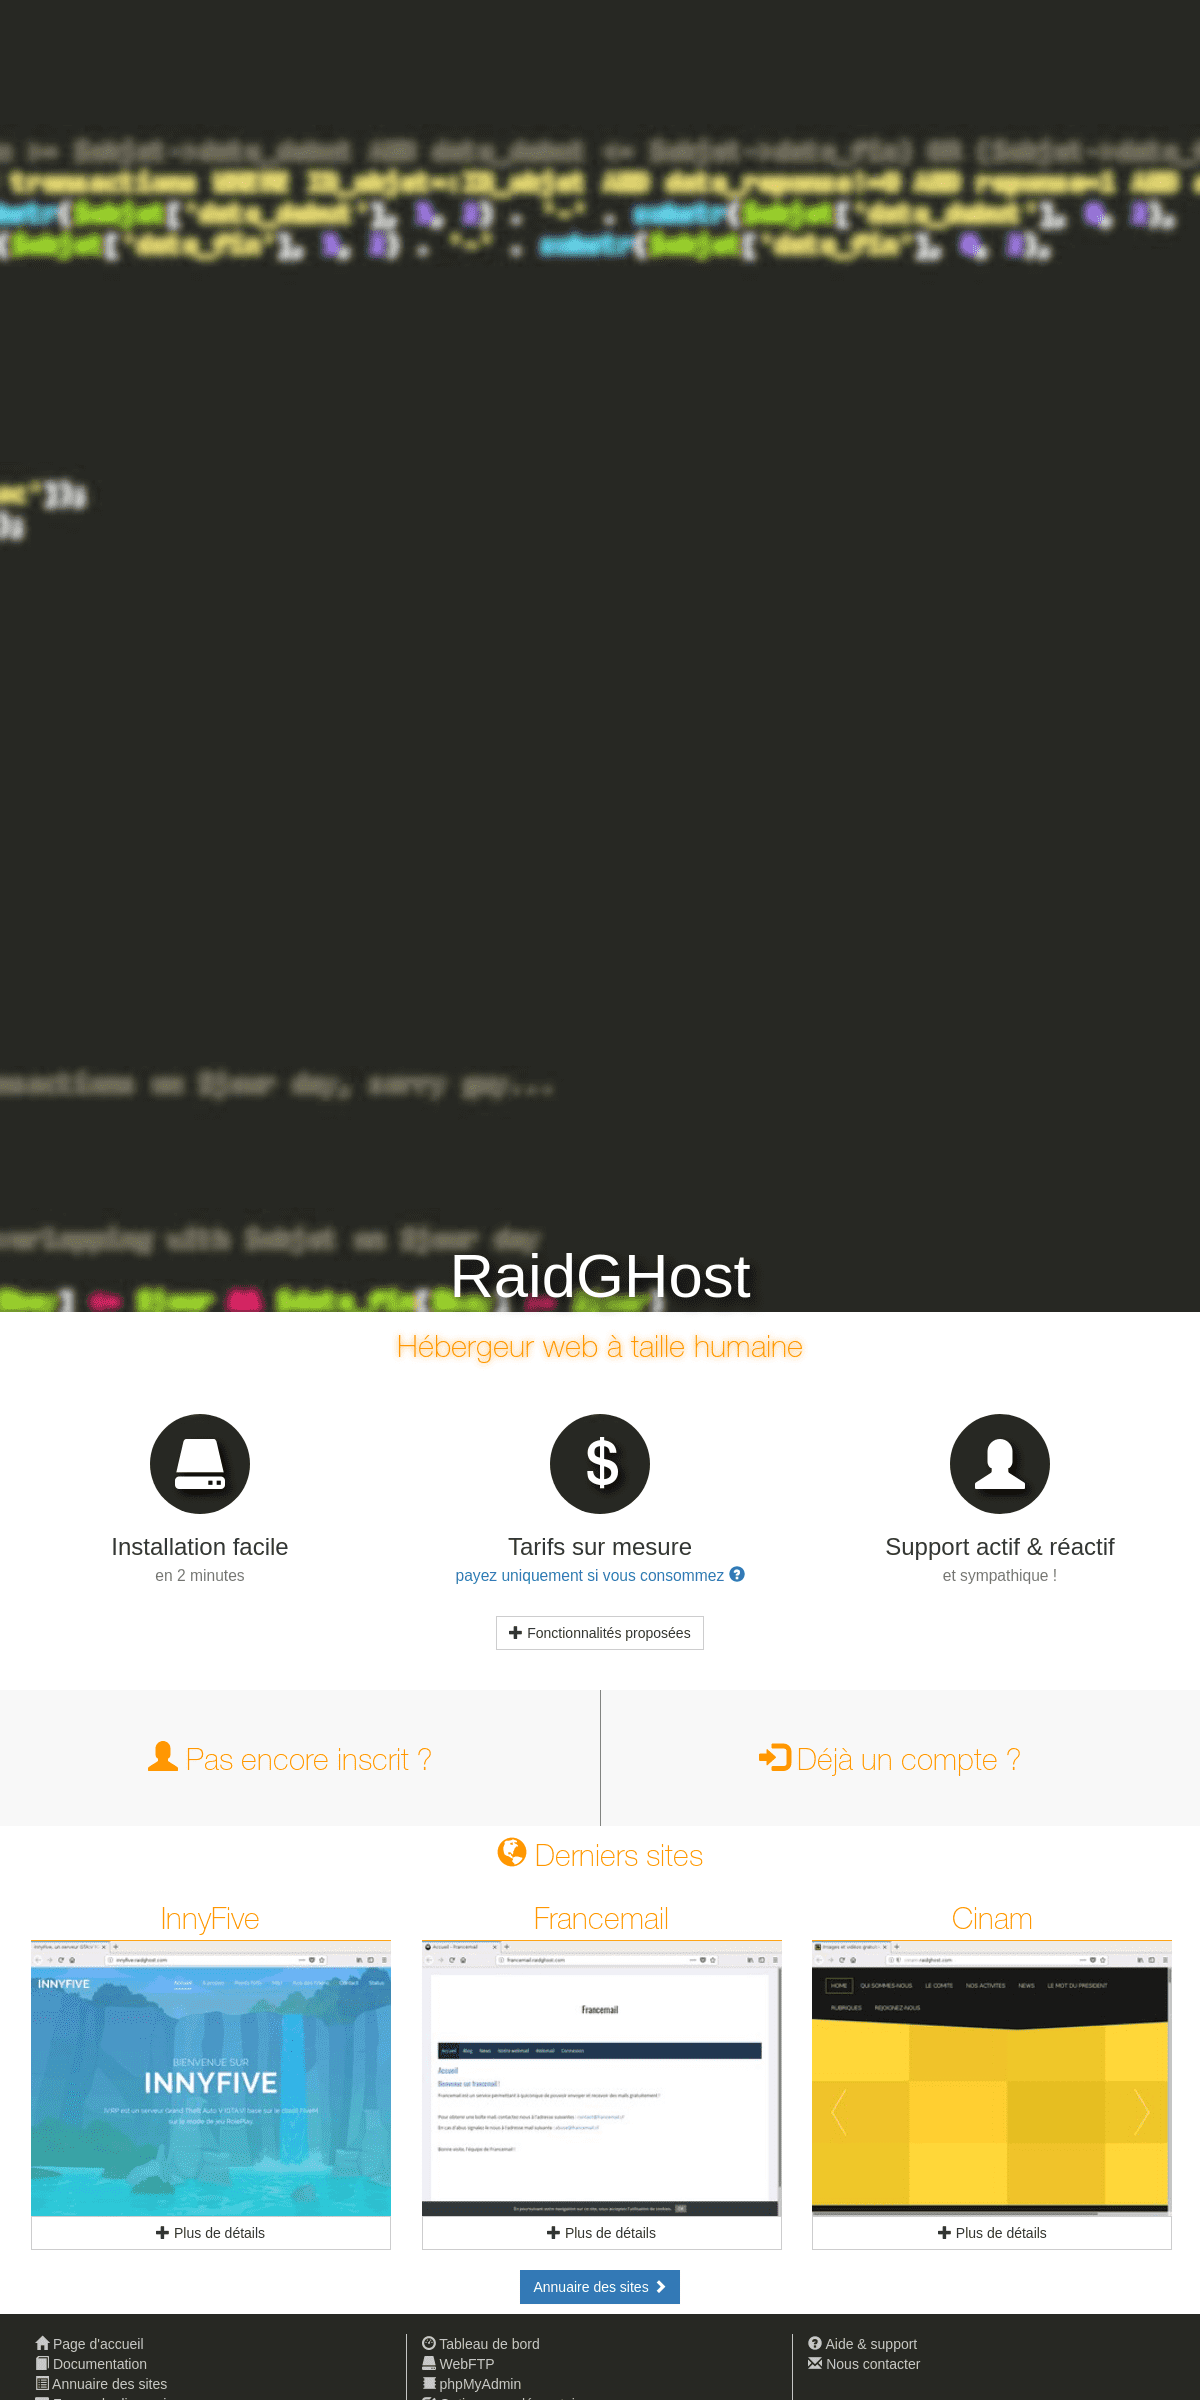 A complete backup of raidghost.com